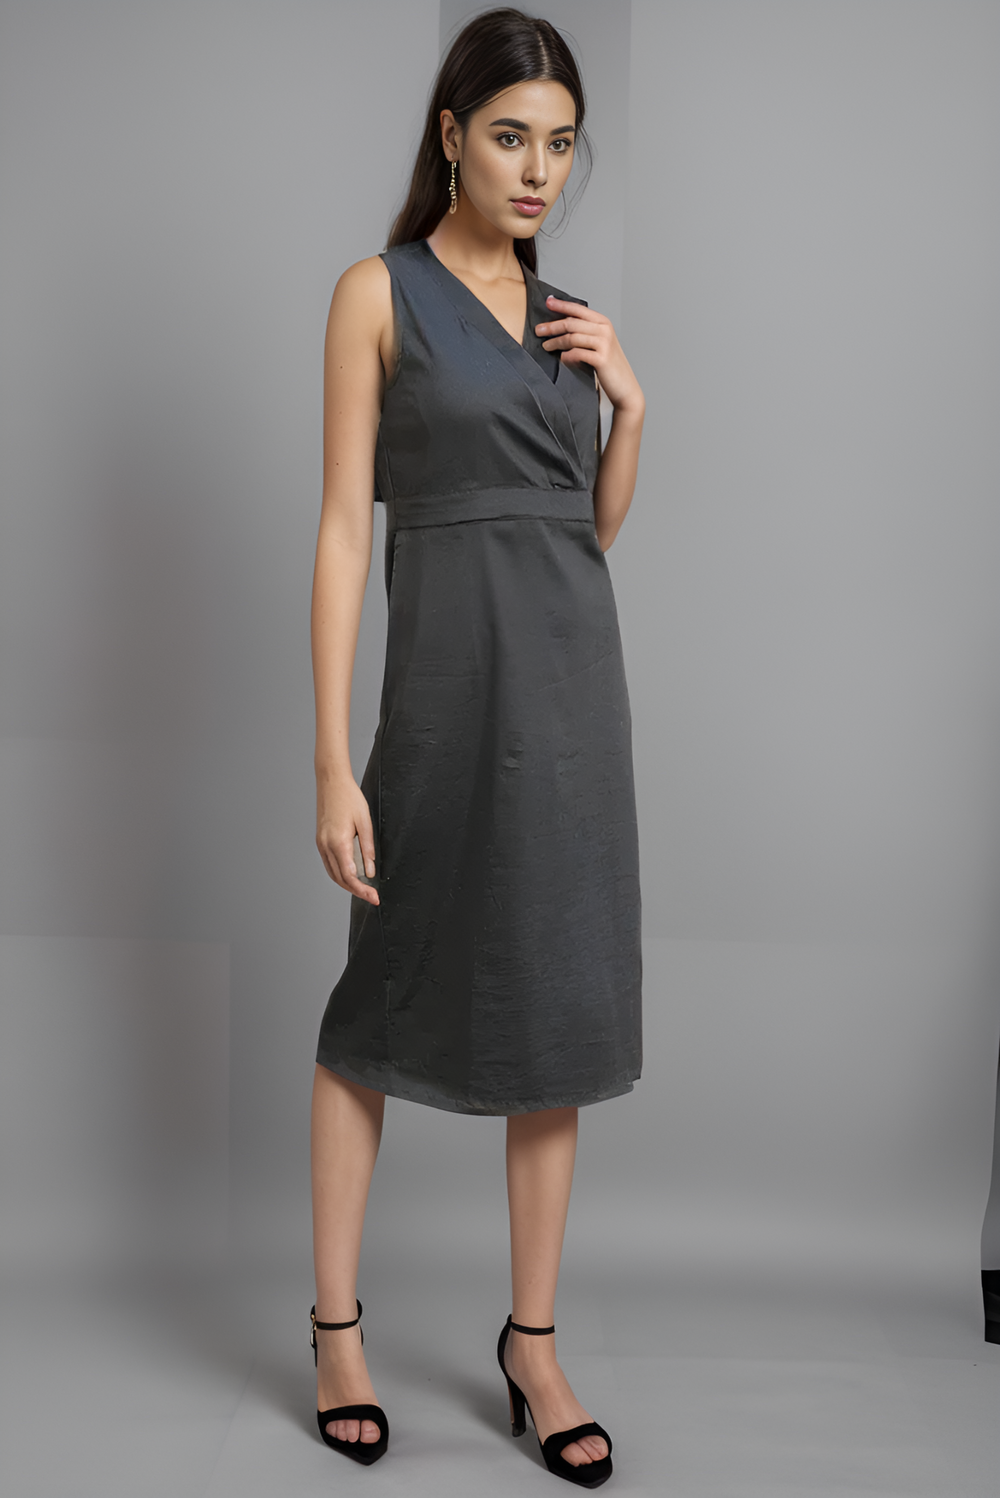 Comfortable Sleeveless Grey Dress with Regular Fit